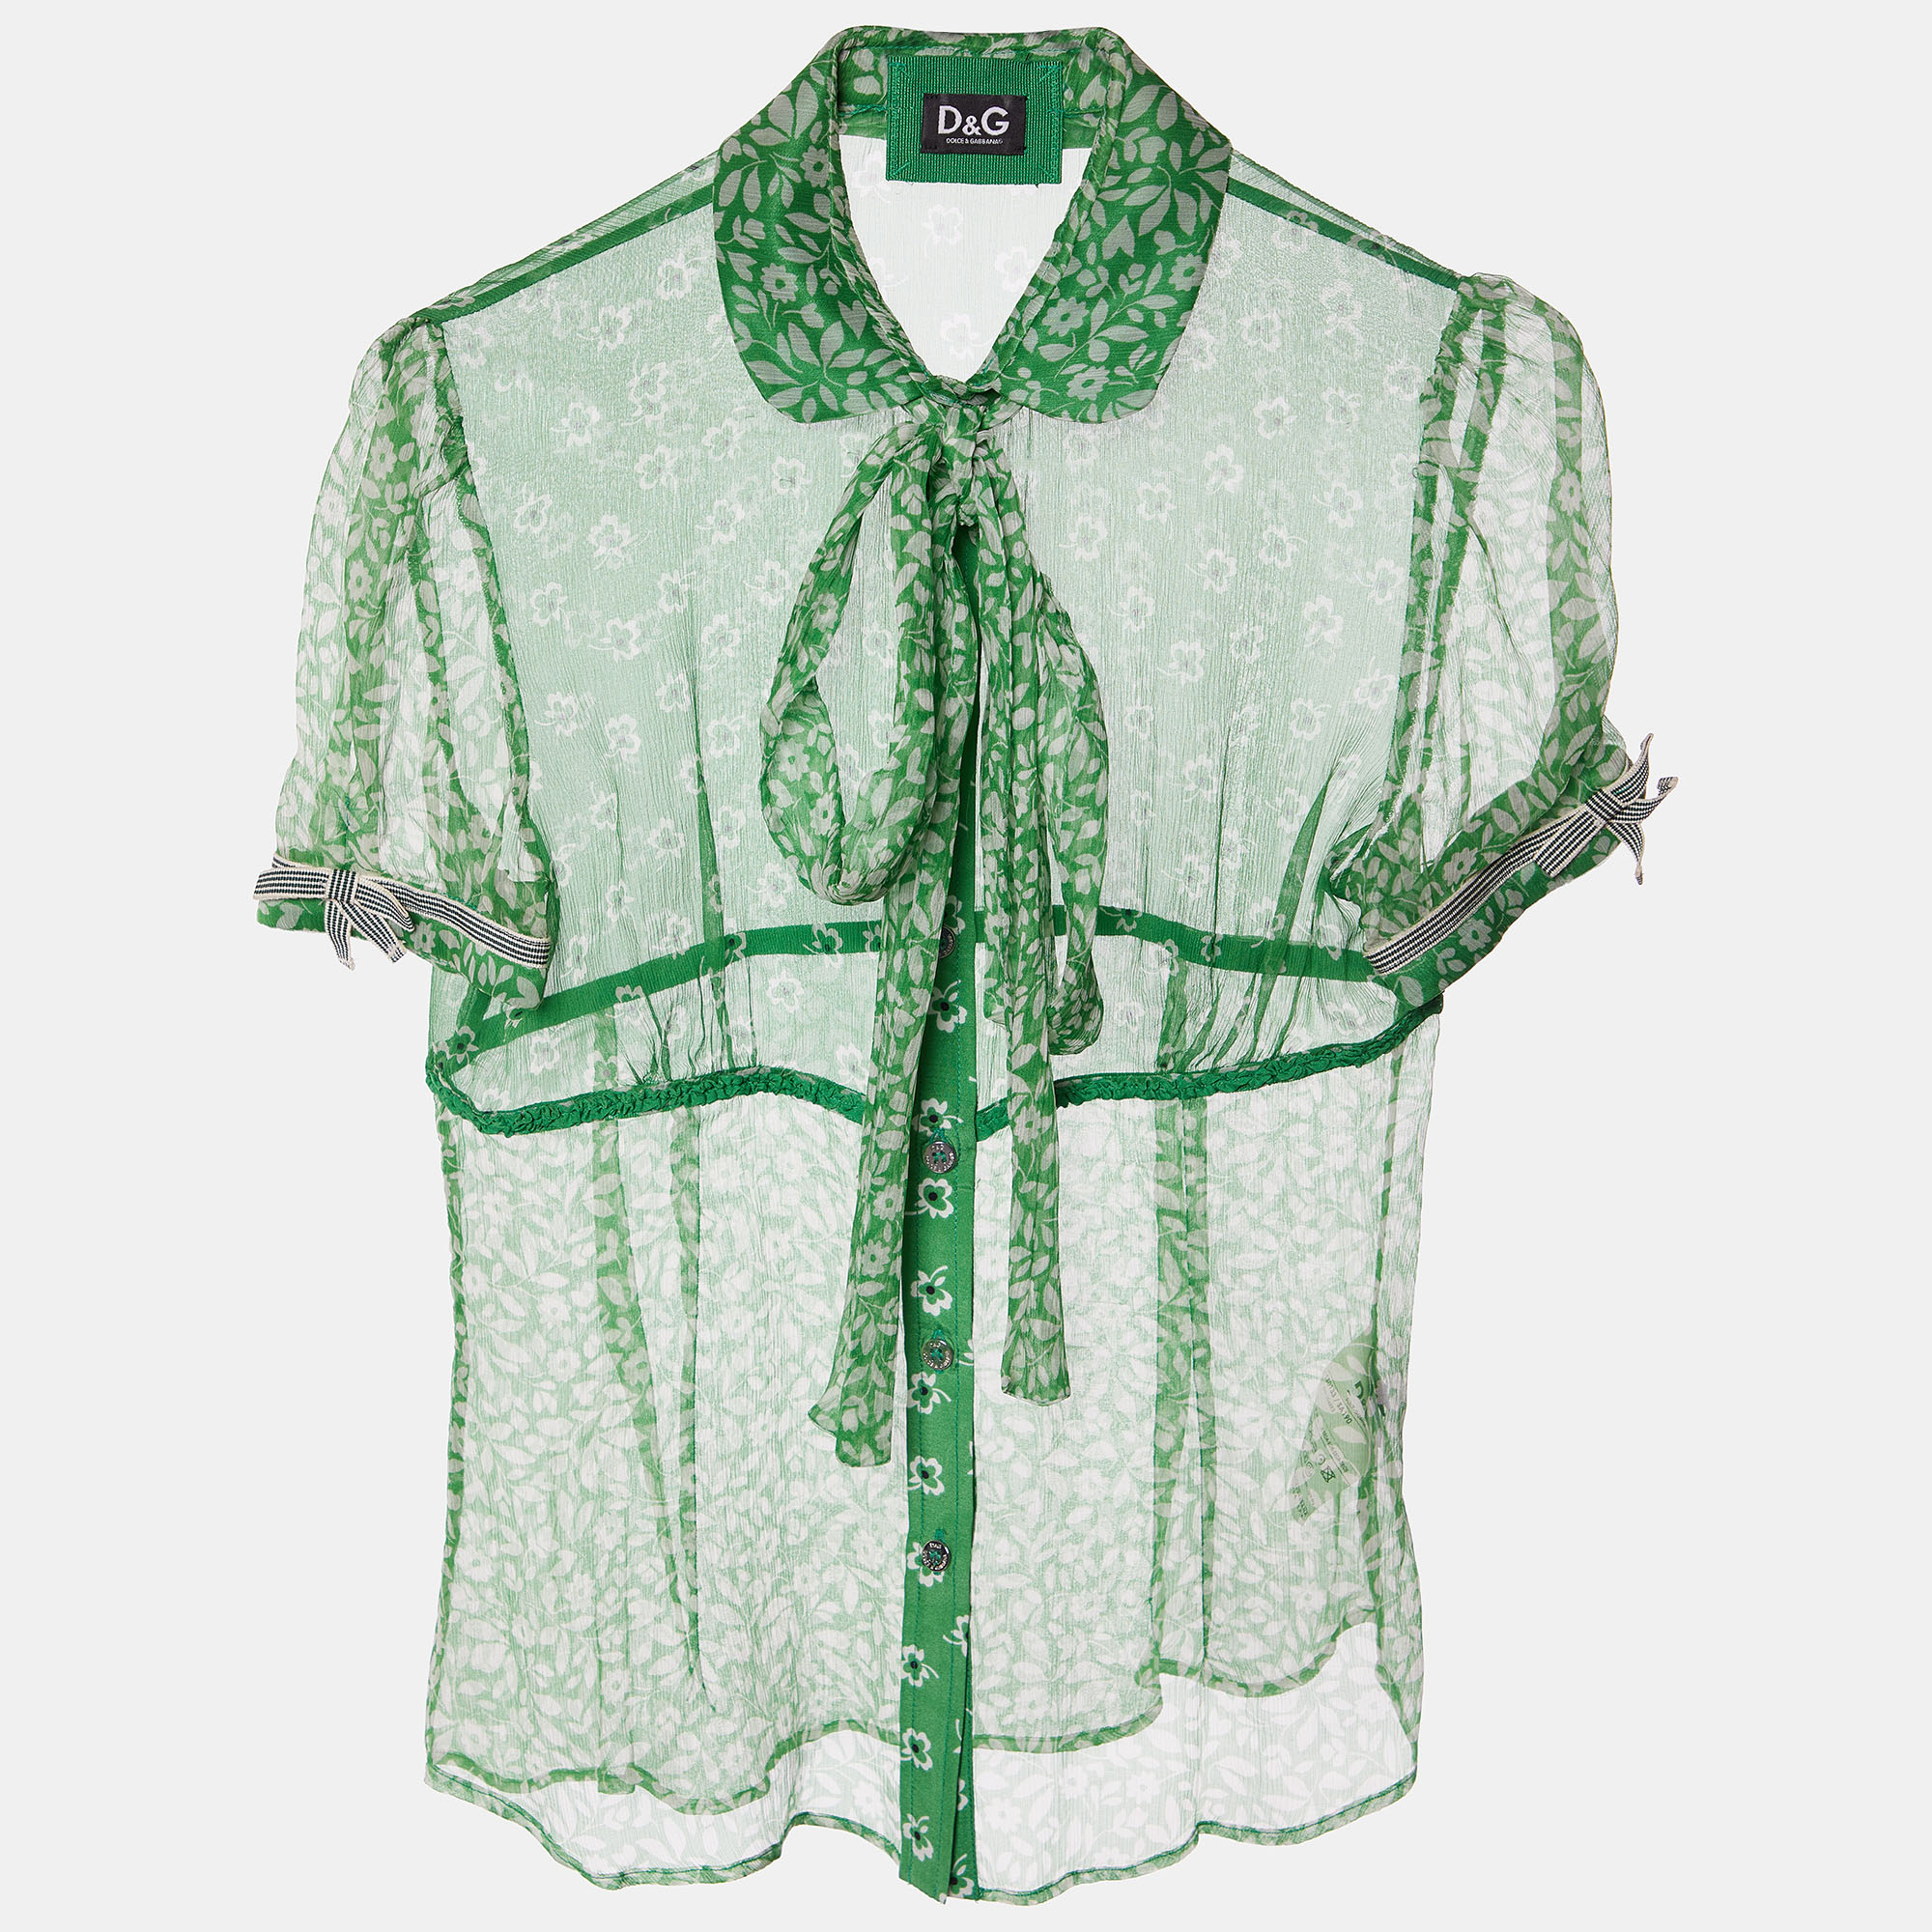 D&g green floral printed silk neck tie detail top m